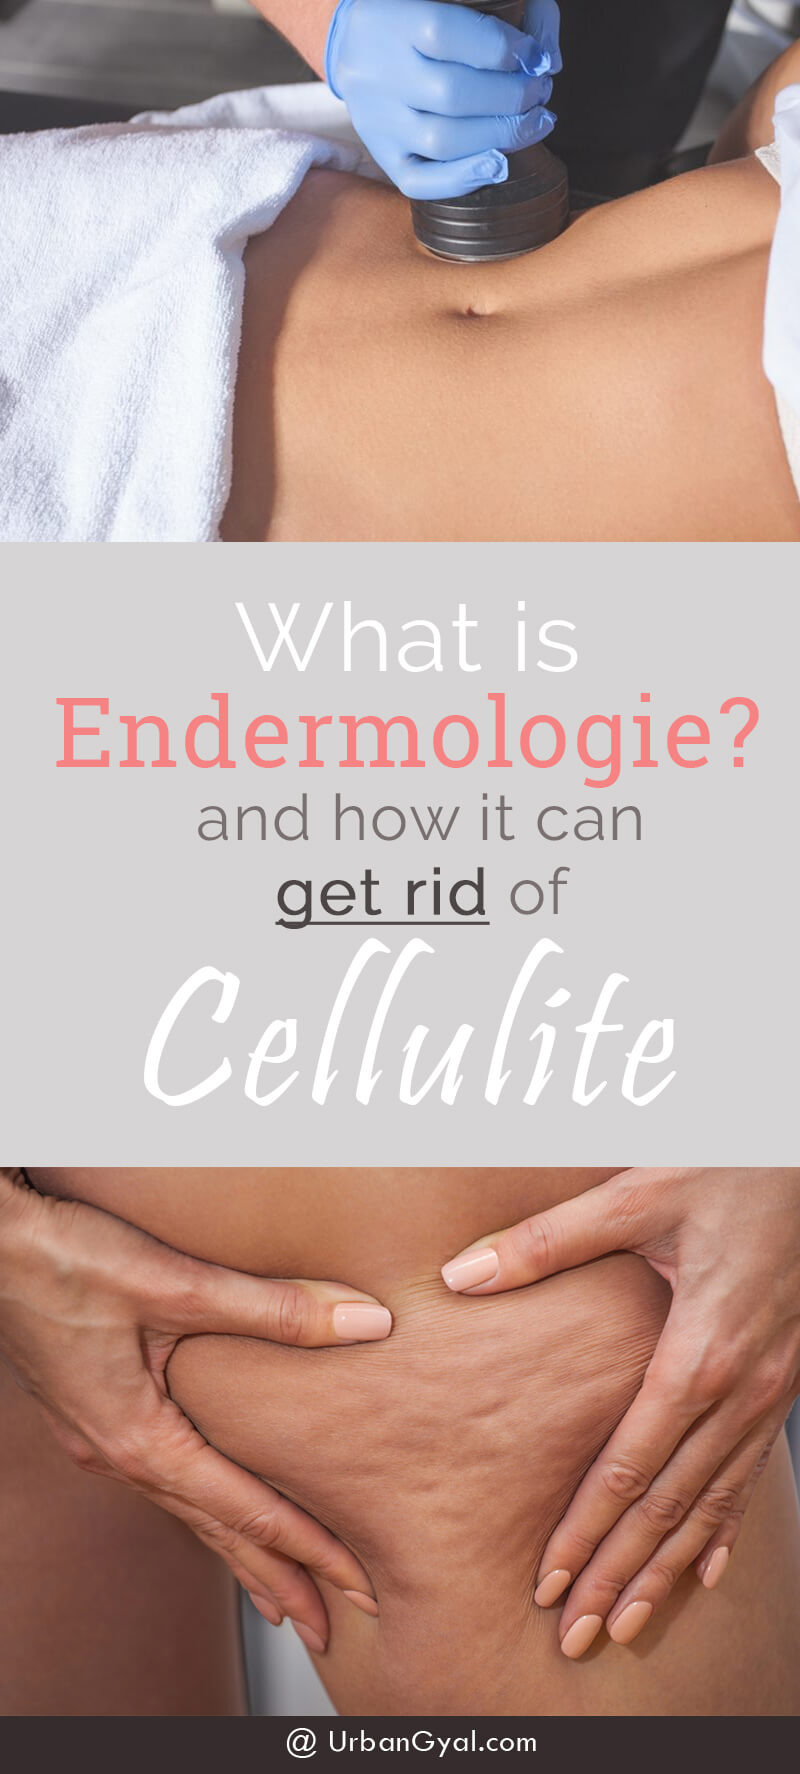 Endermologie Cellulite Treatment